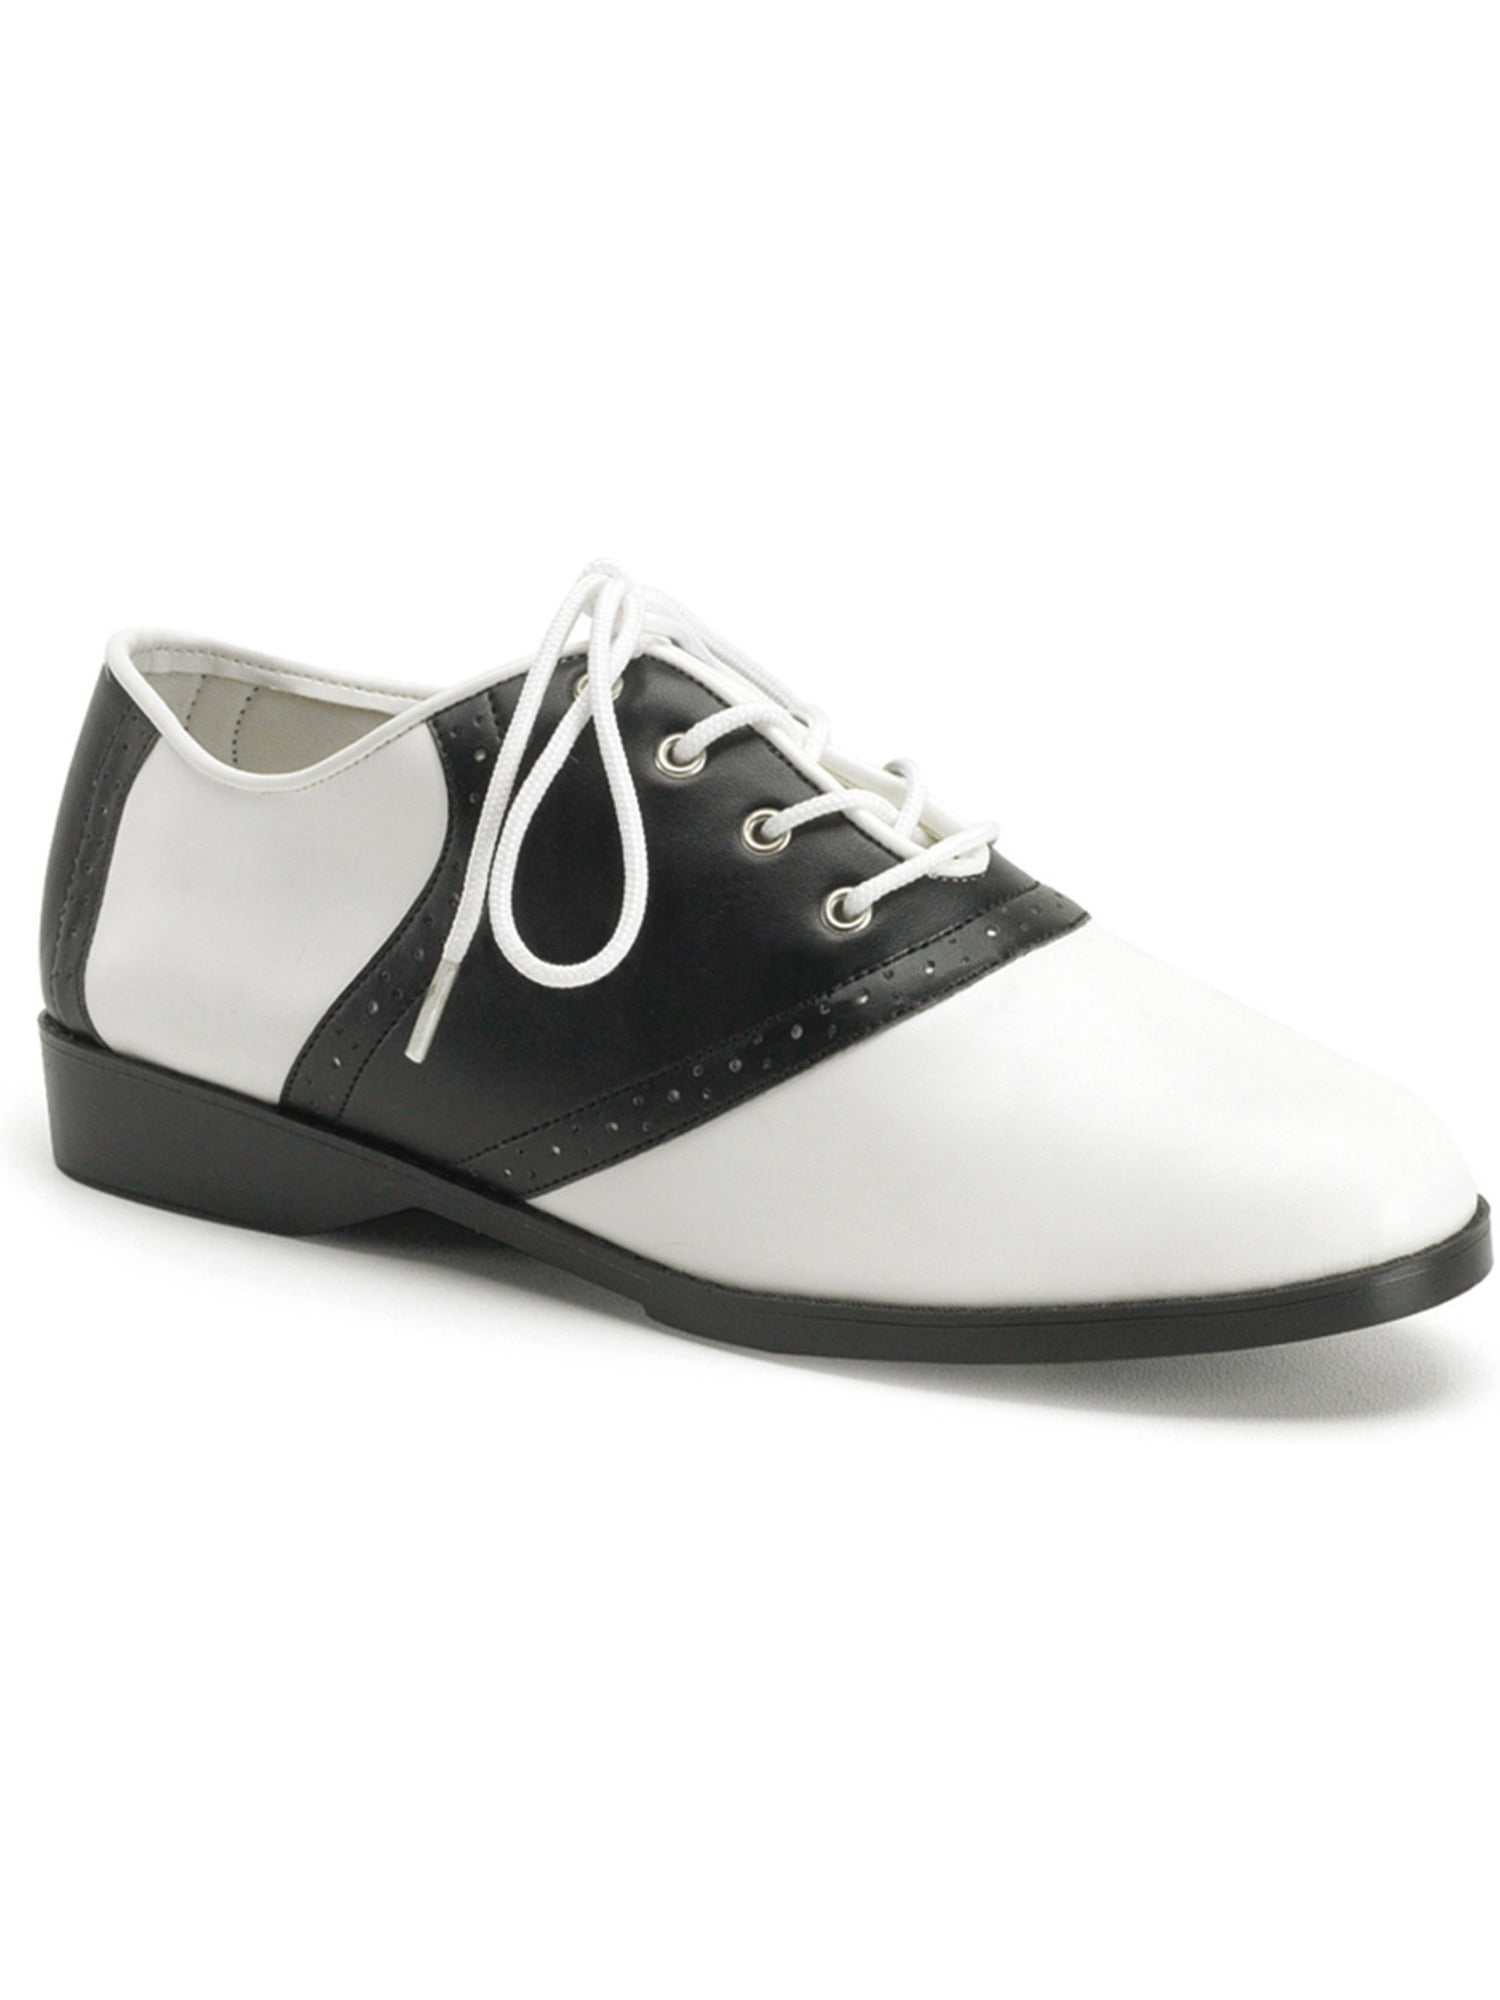 black white flats women's shoes